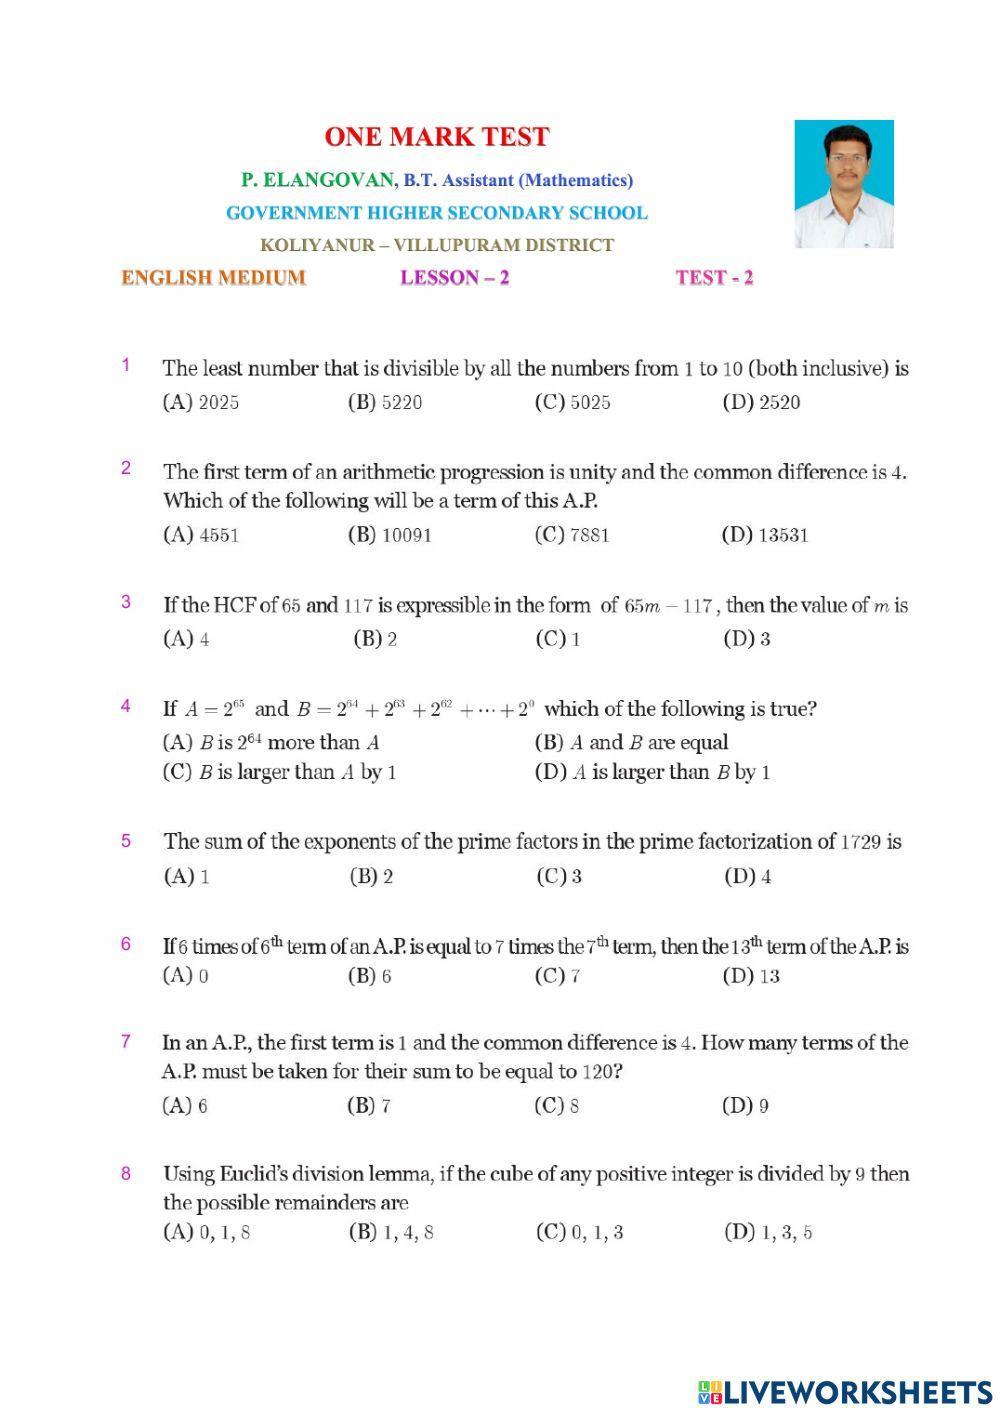 Class 10 Maths English Medium Lesson2 Test 2